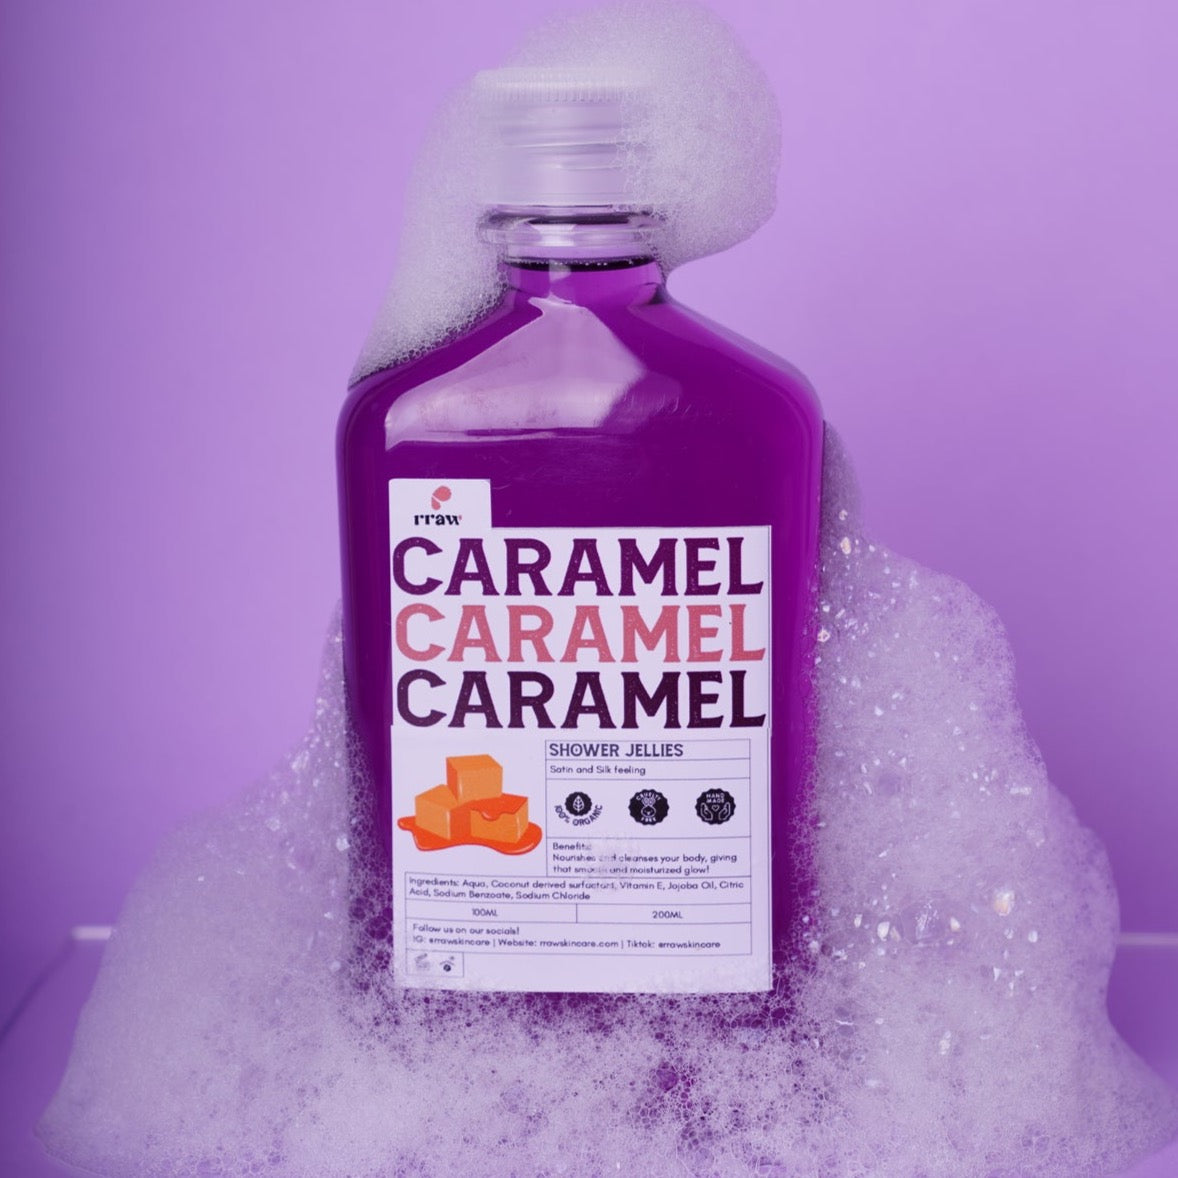 Caramel Shower Jelly